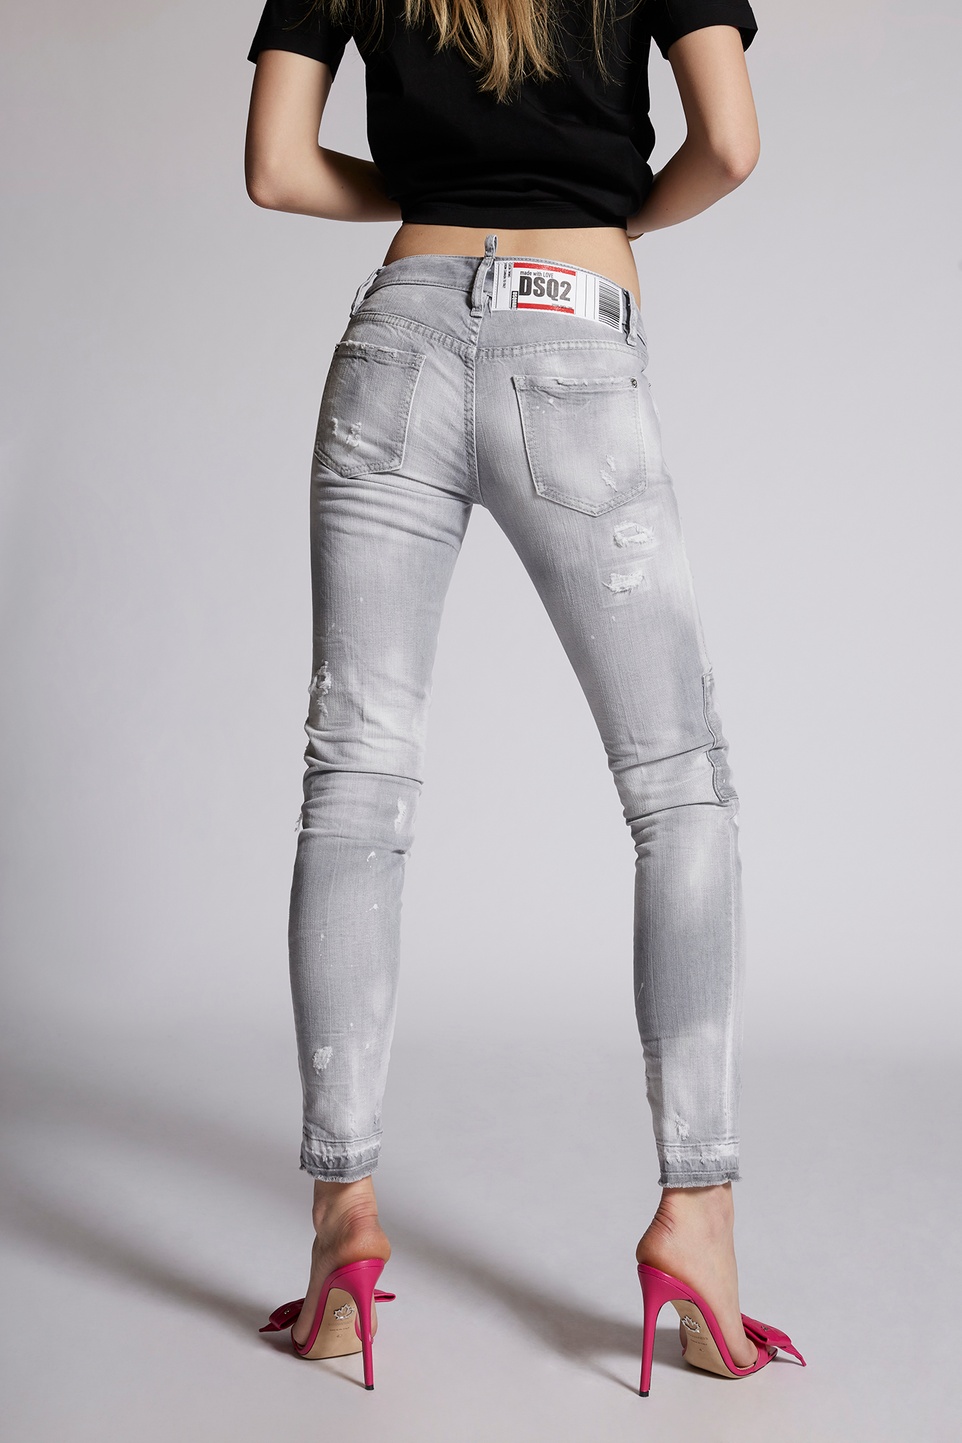 Dsquared Jeans Jennifer Light Grey Washed  36 IT / 30 DE